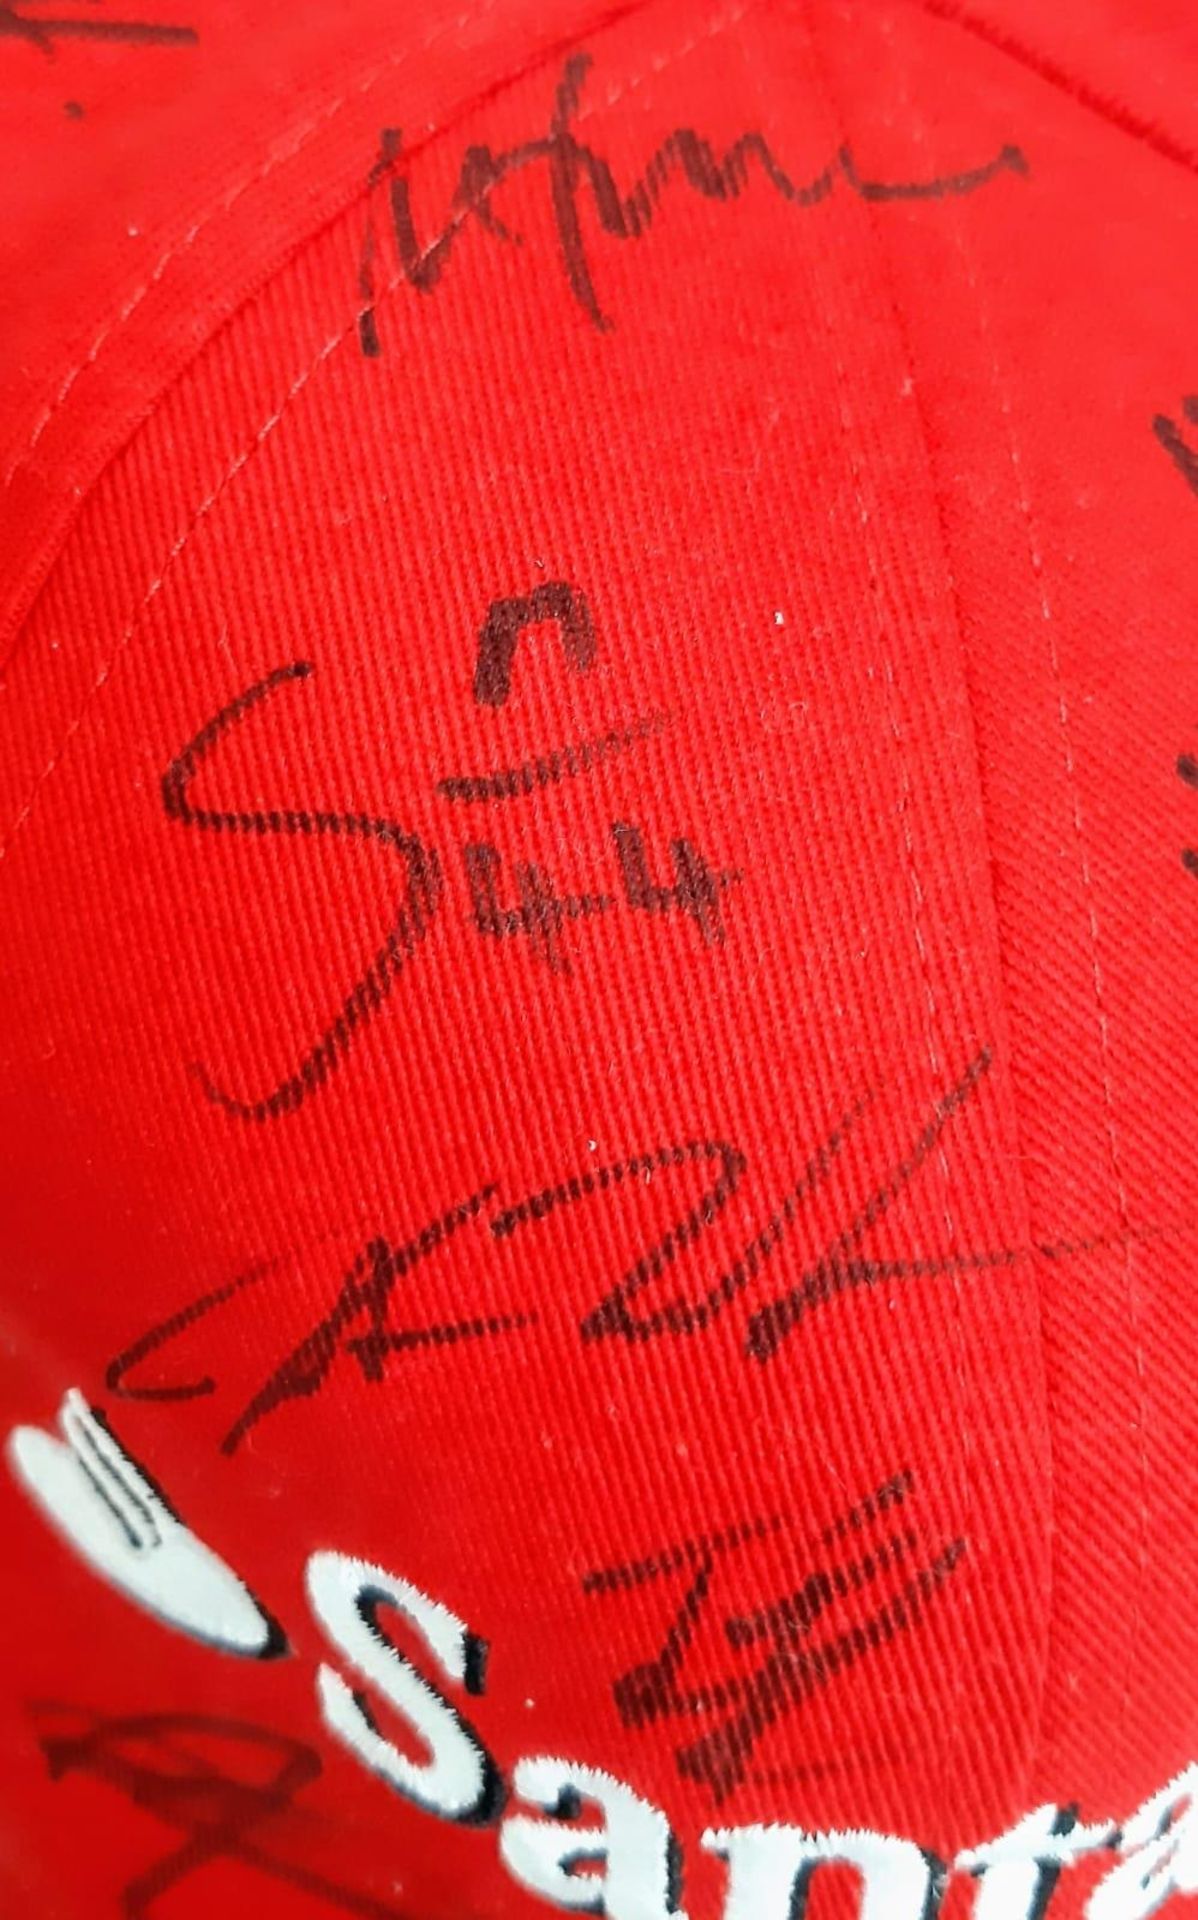 An Official Ferrari Team Cap - Over 20 signatures including Ferrari drivers and team principals. - Image 14 of 14